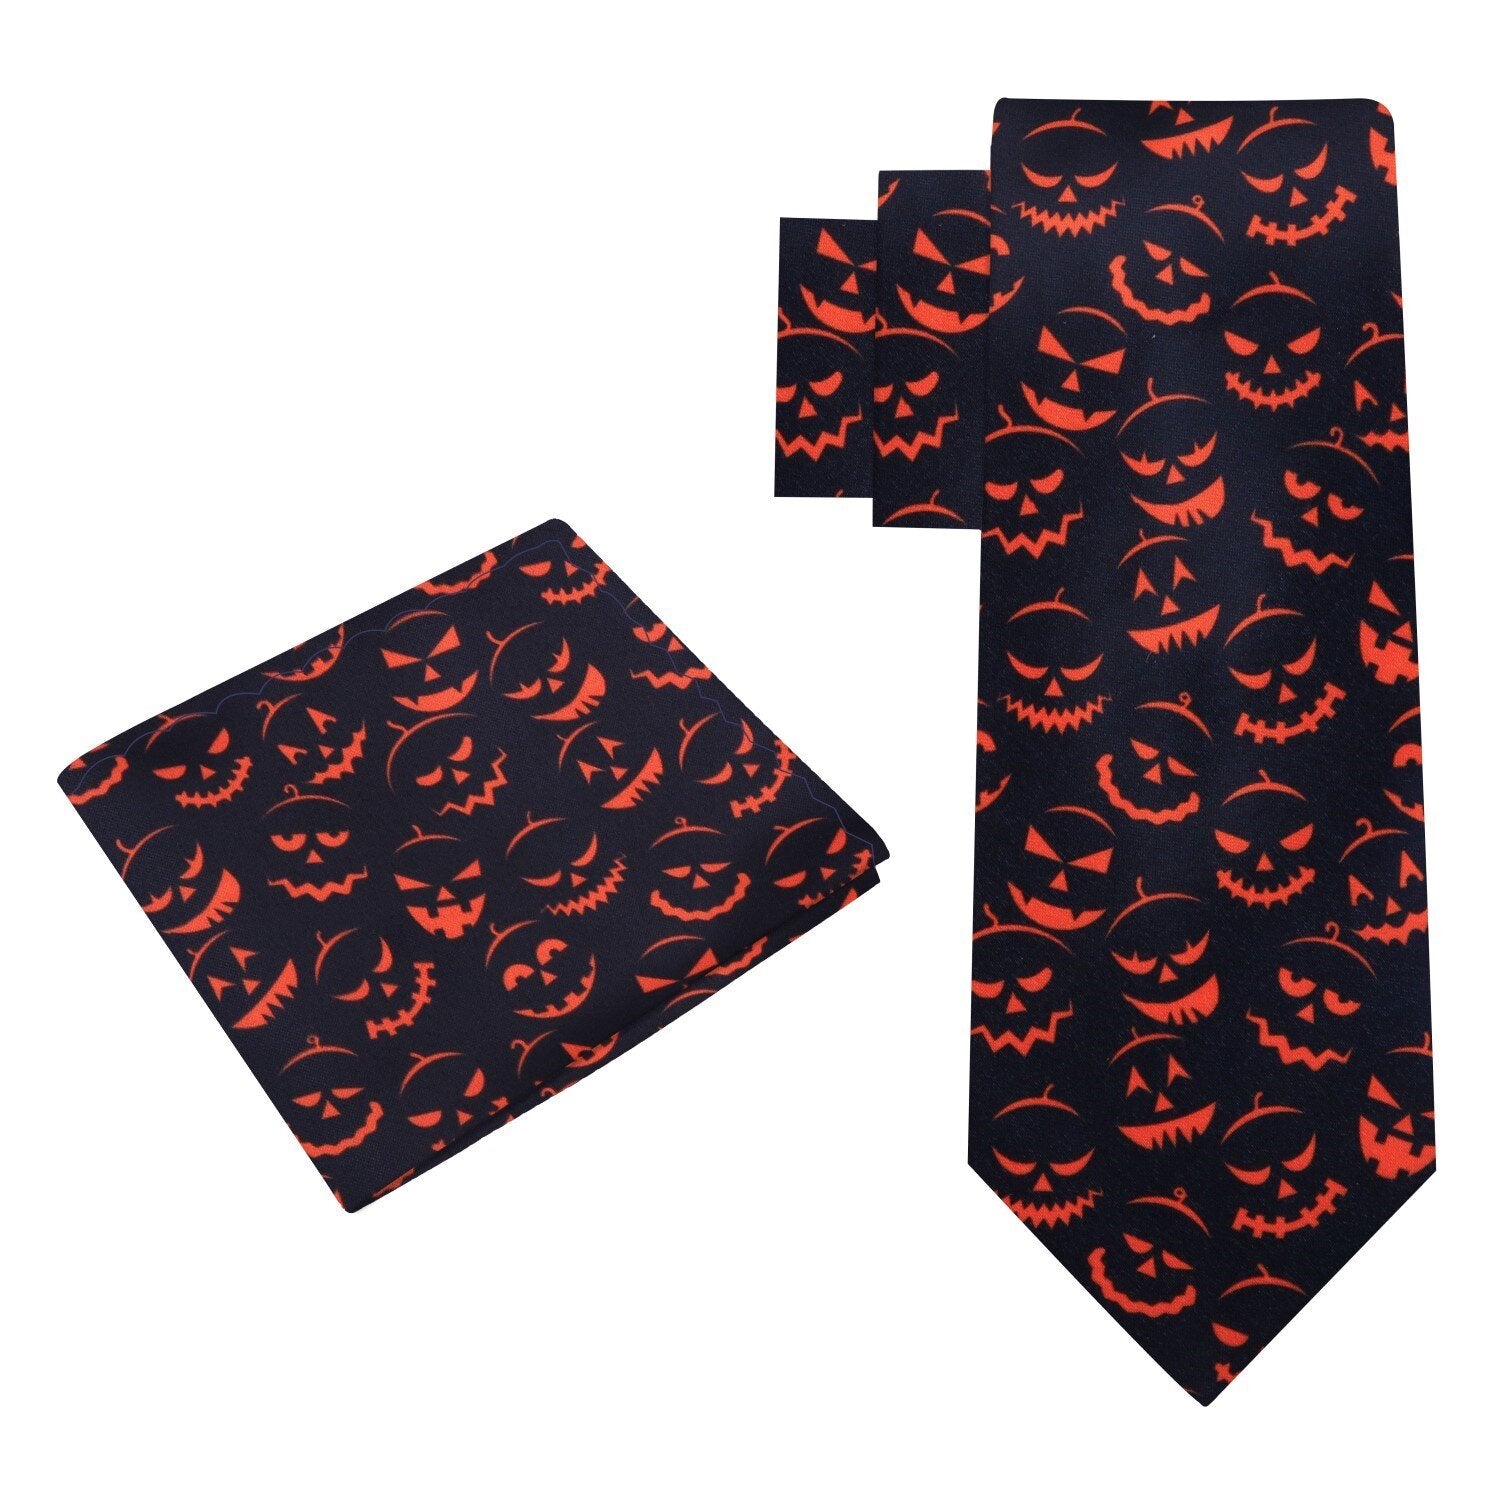 Alt View: Black, Orange Jack-O-Lantern Tie and Square